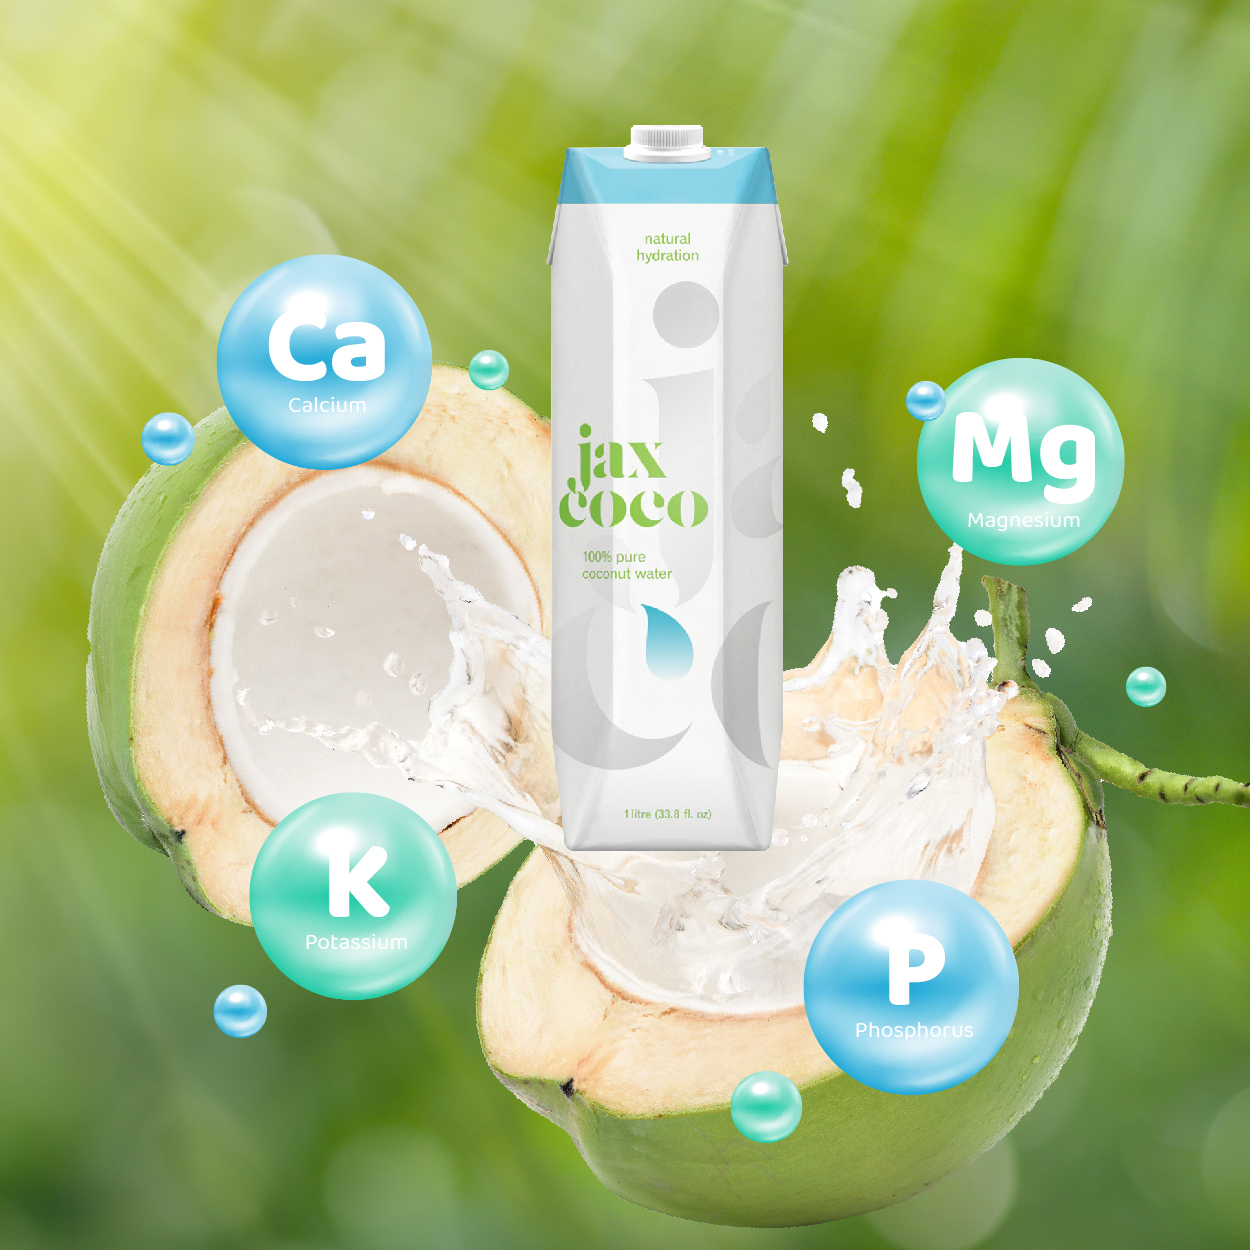 Jax Coco 100%原汁椰子水 採用純天然椰子汁 微過濾工藝與及高溫殺菌處理